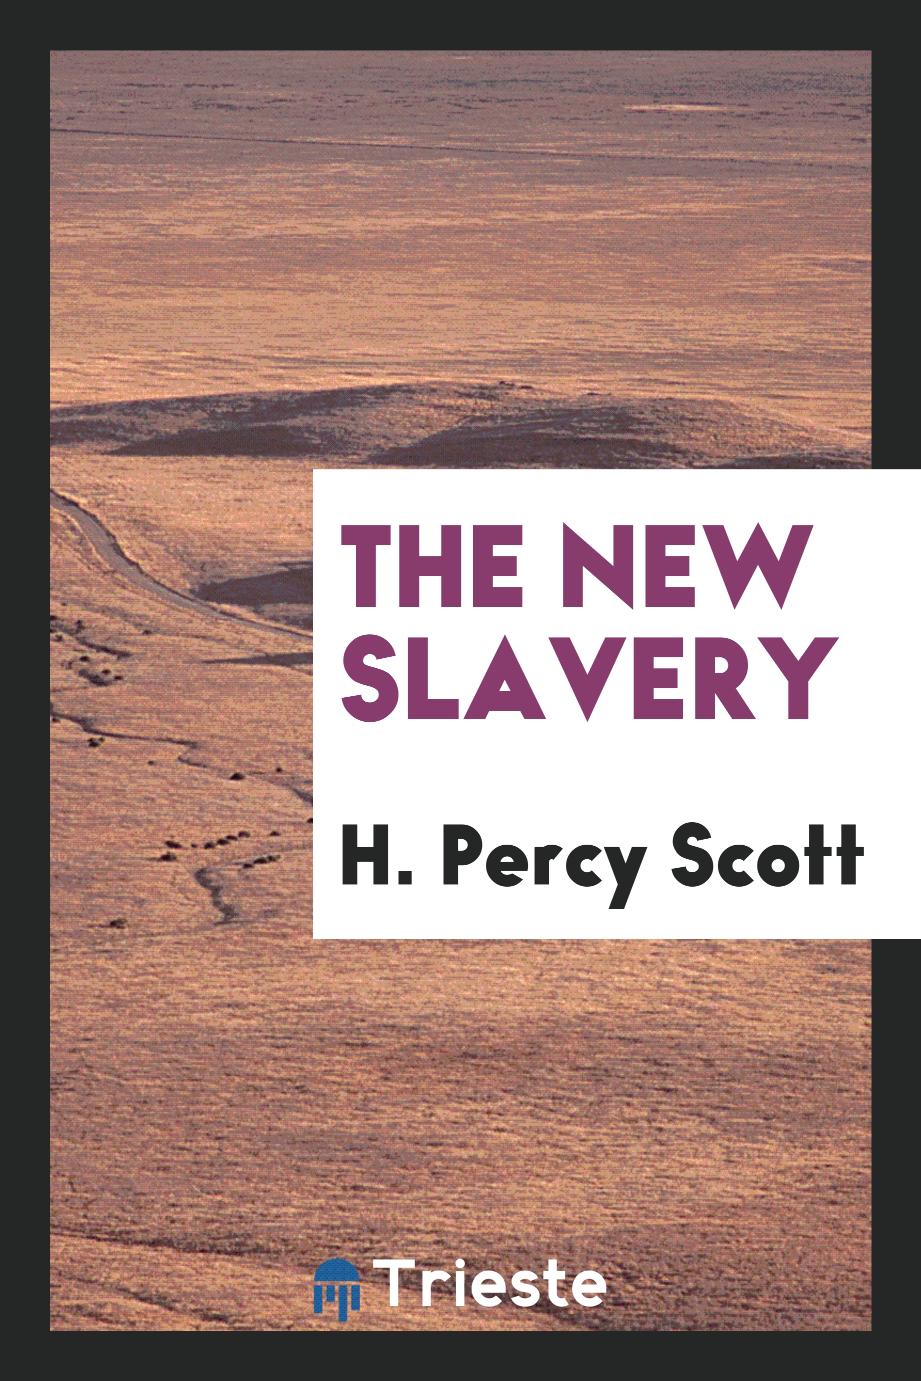 The new slavery